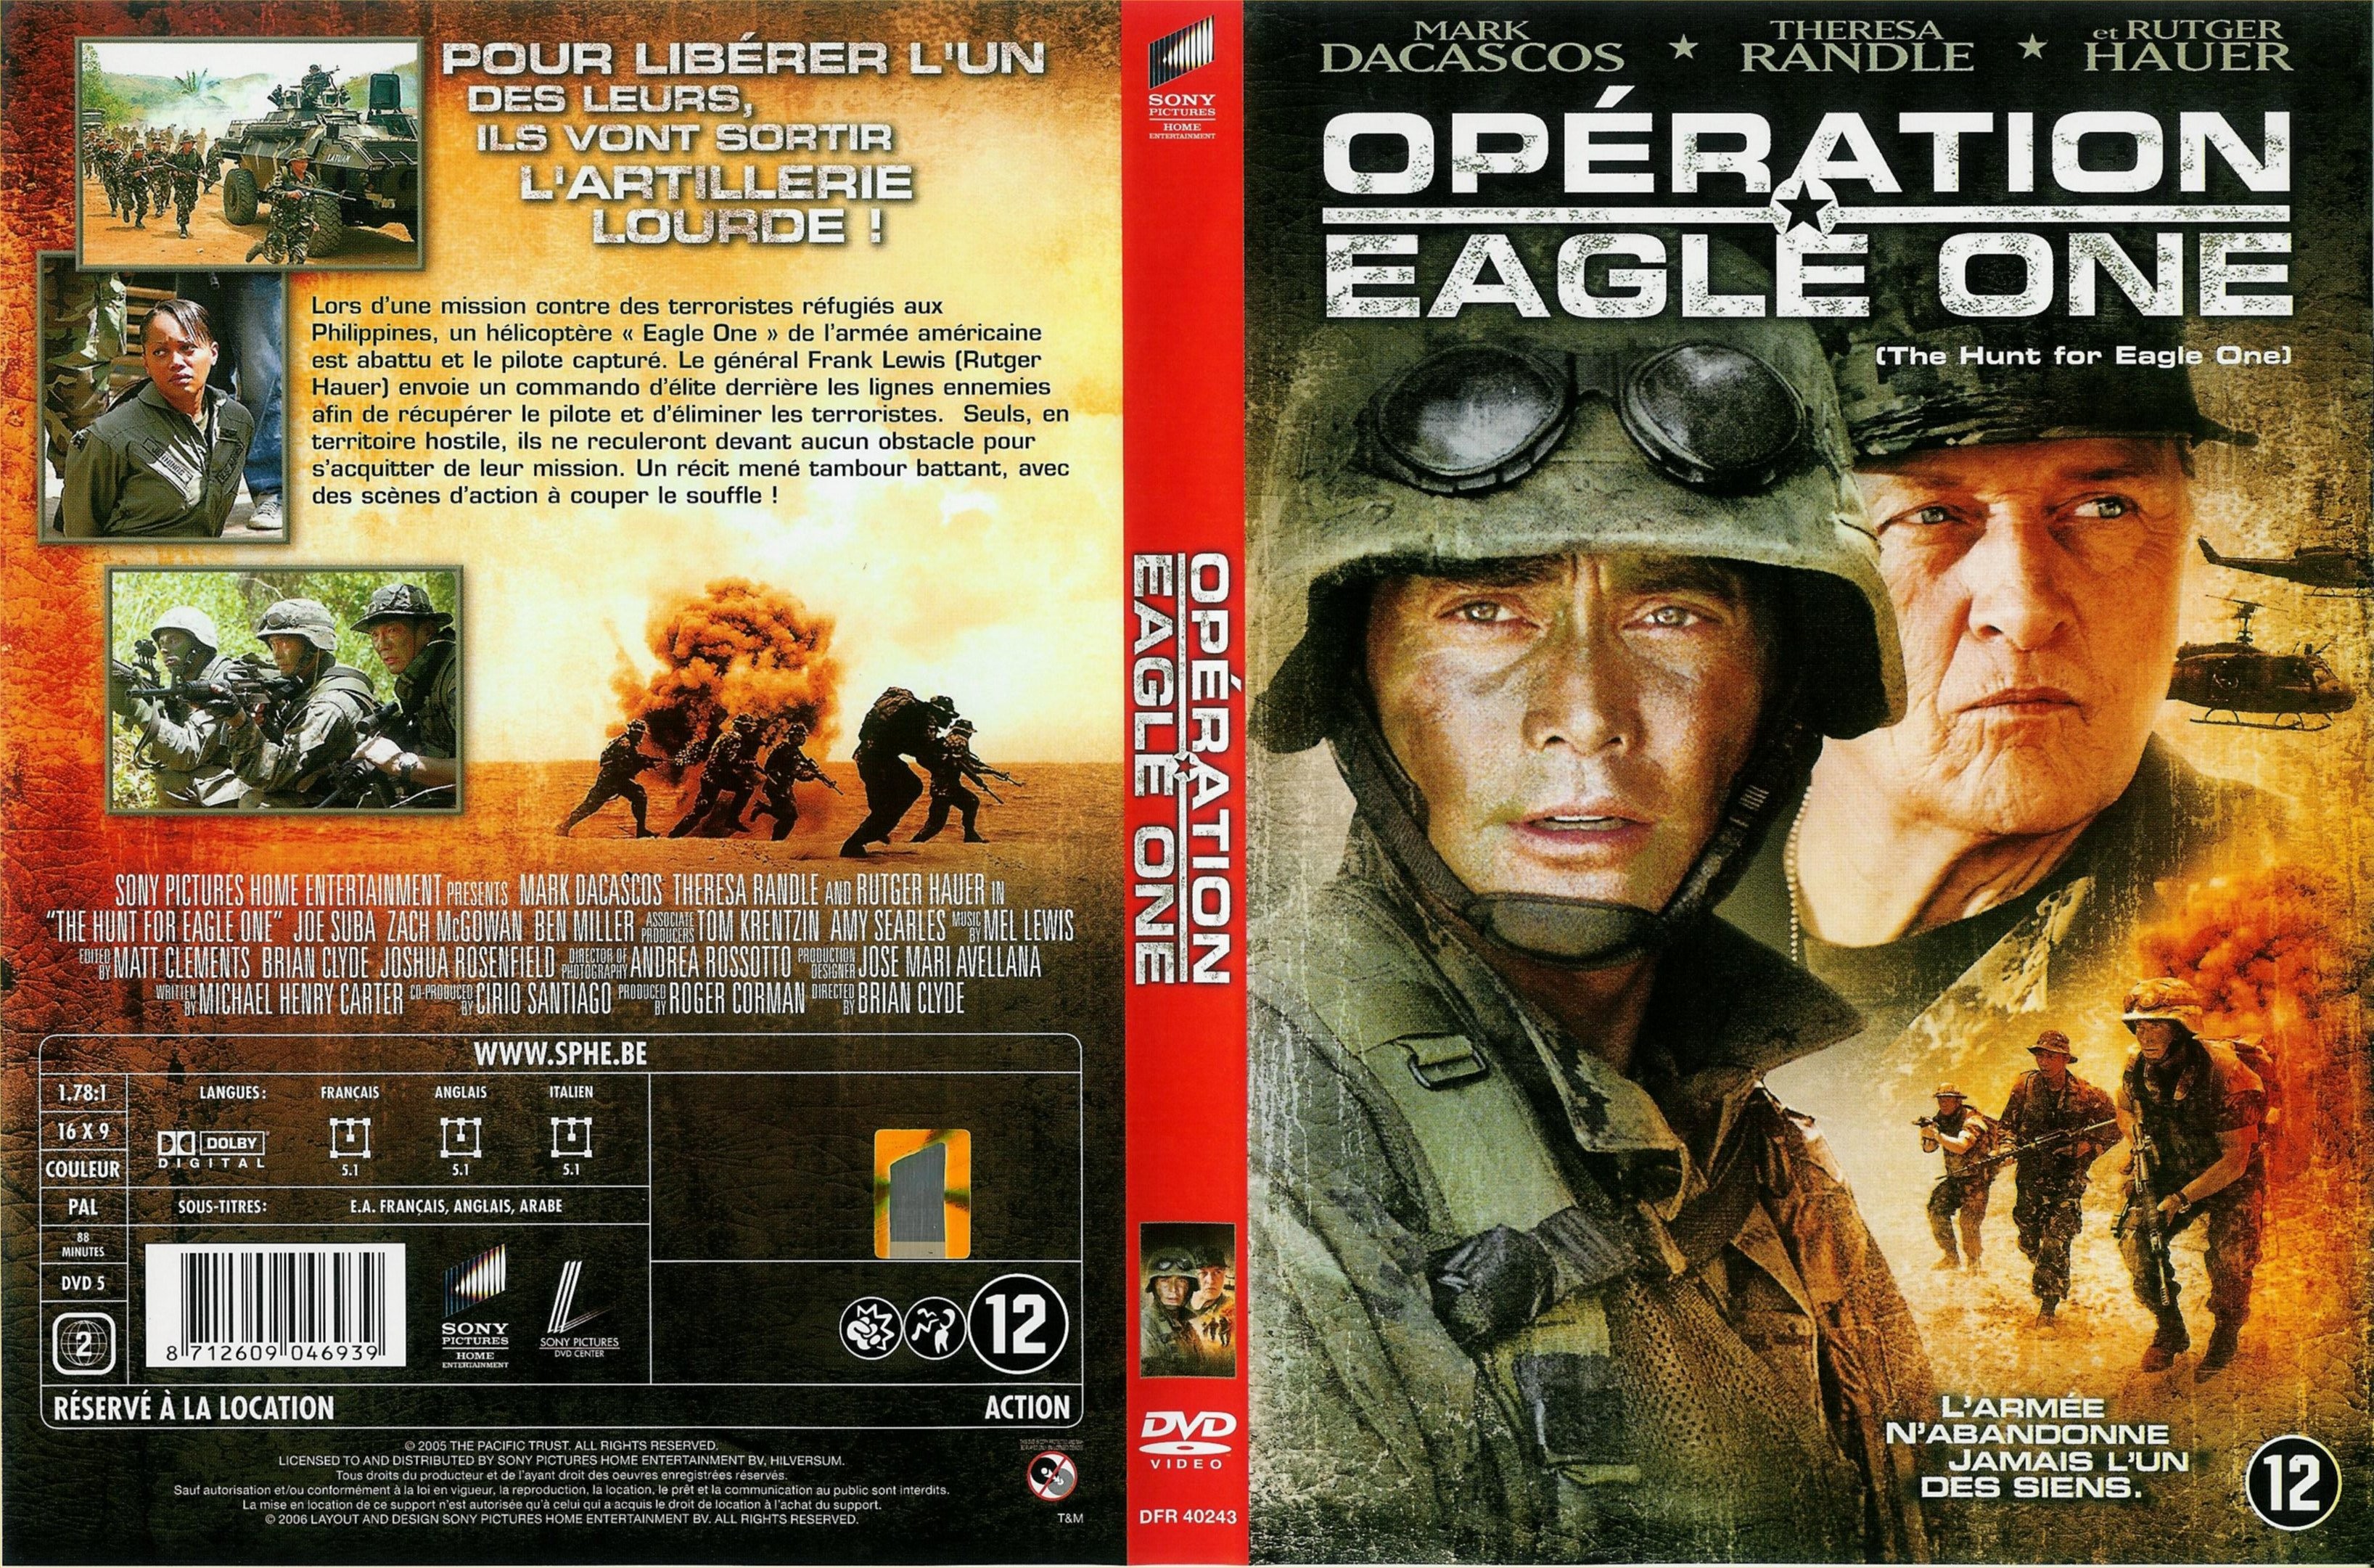 Jaquette DVD Operation eagle one v3